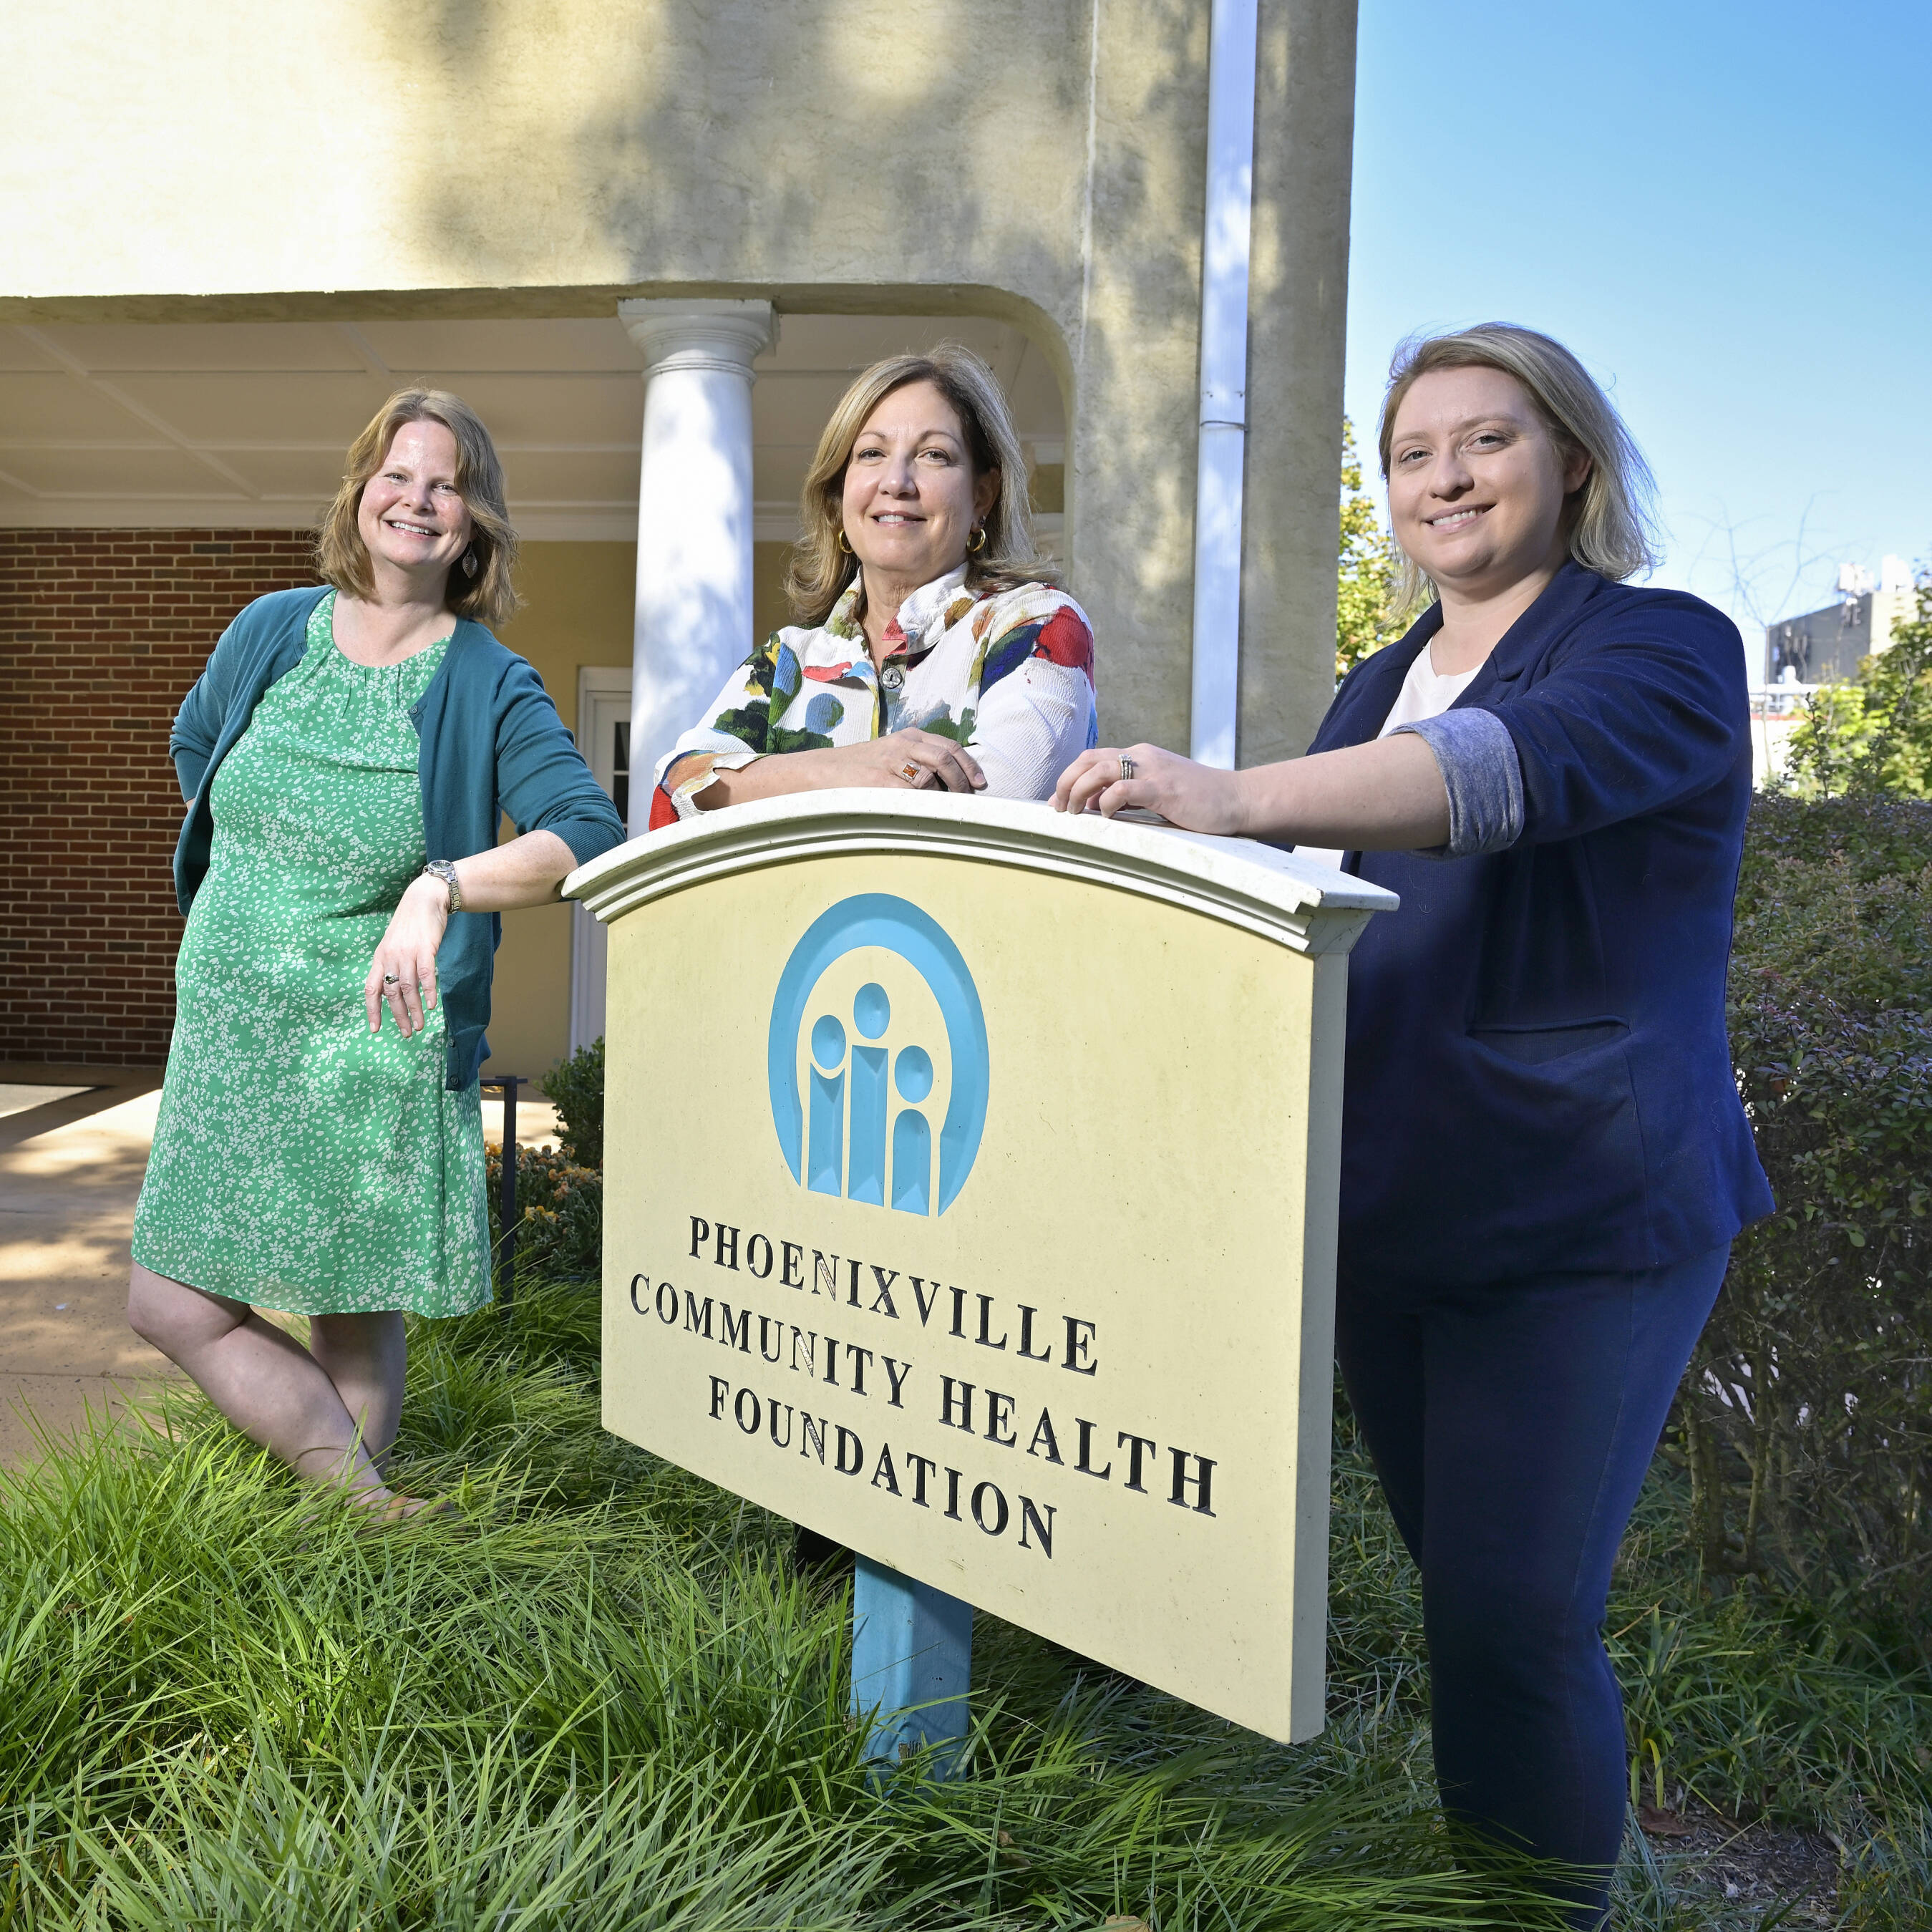 The Phoenixville Community Health Foundation